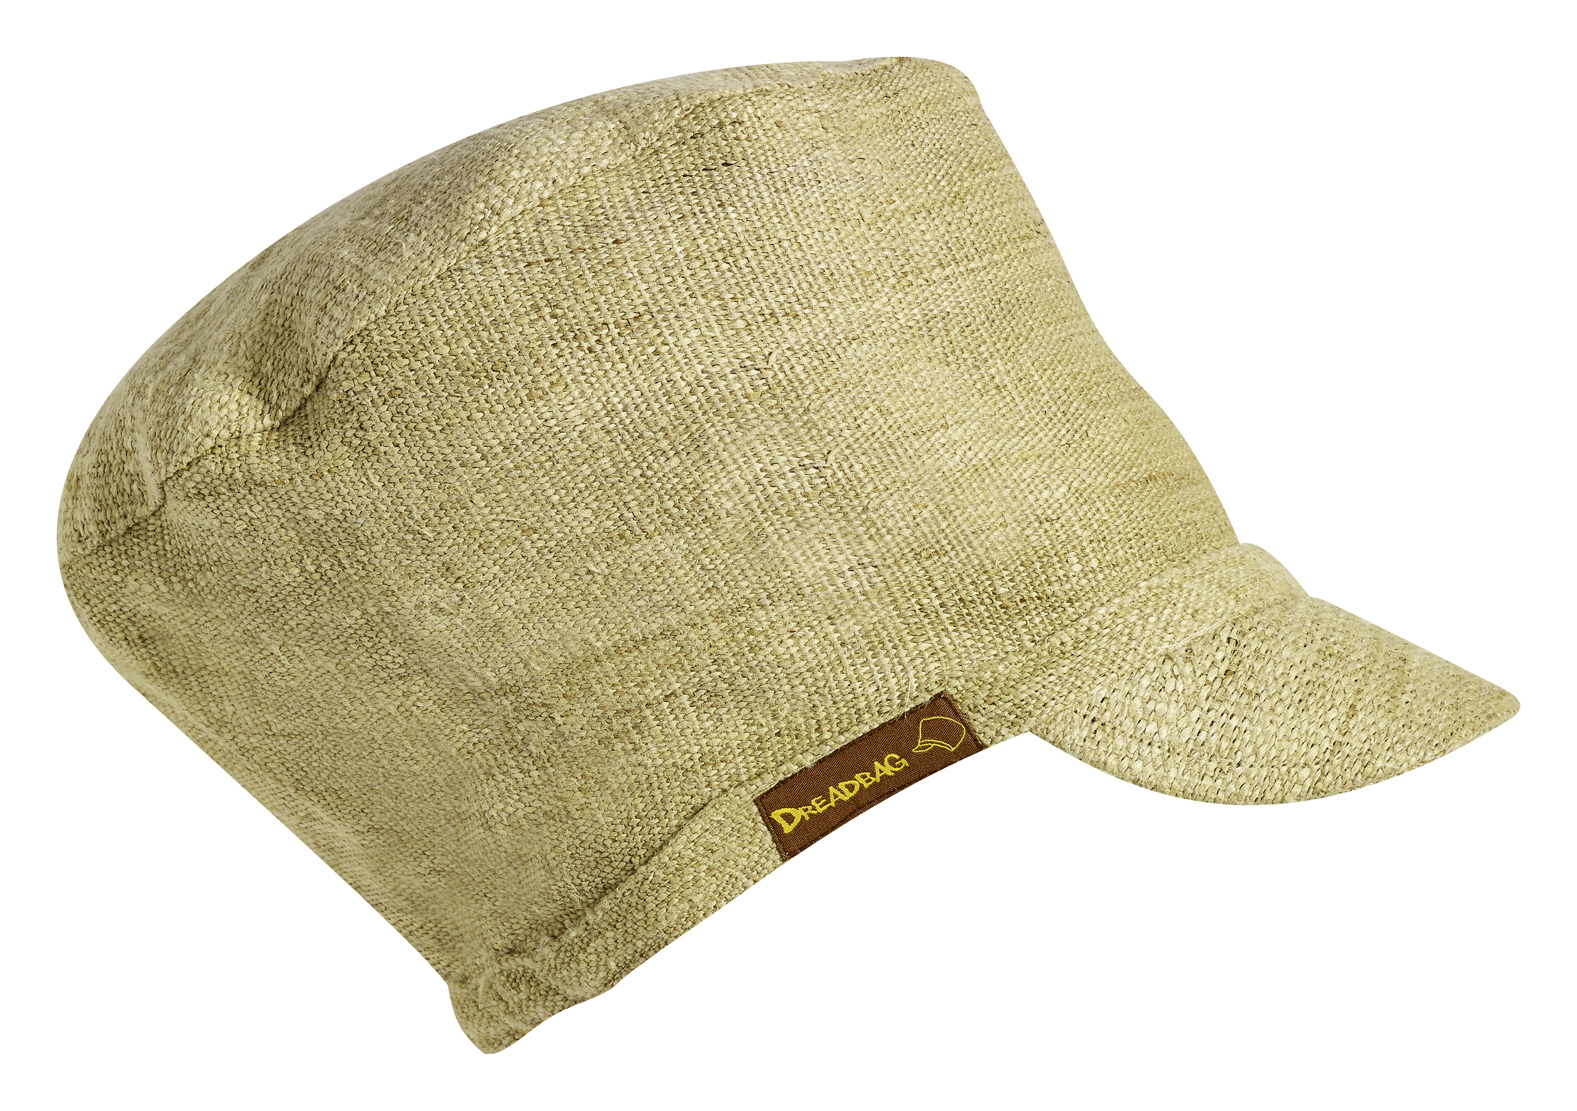 Dreadbag iz konoplje - naravni konopljin klobuk